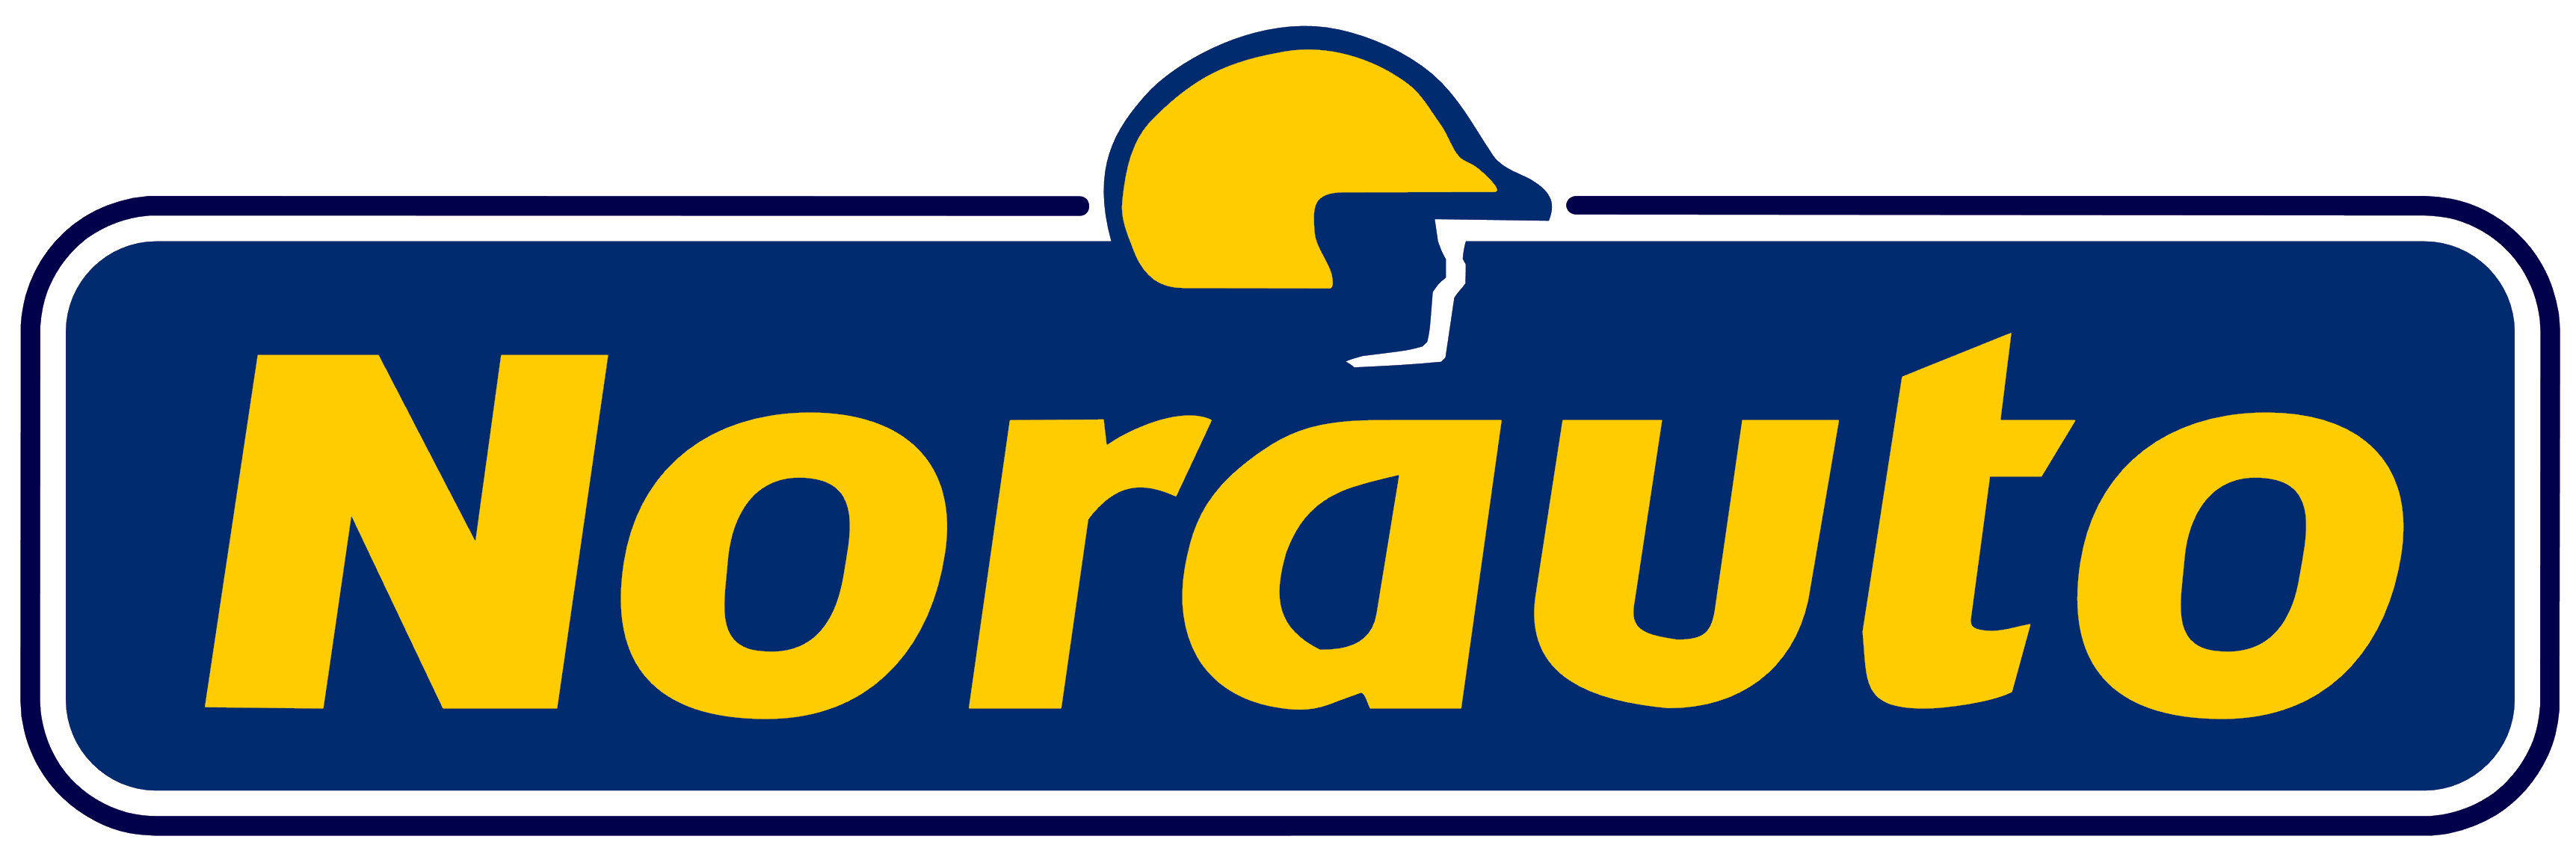 Norauto logo, logotype